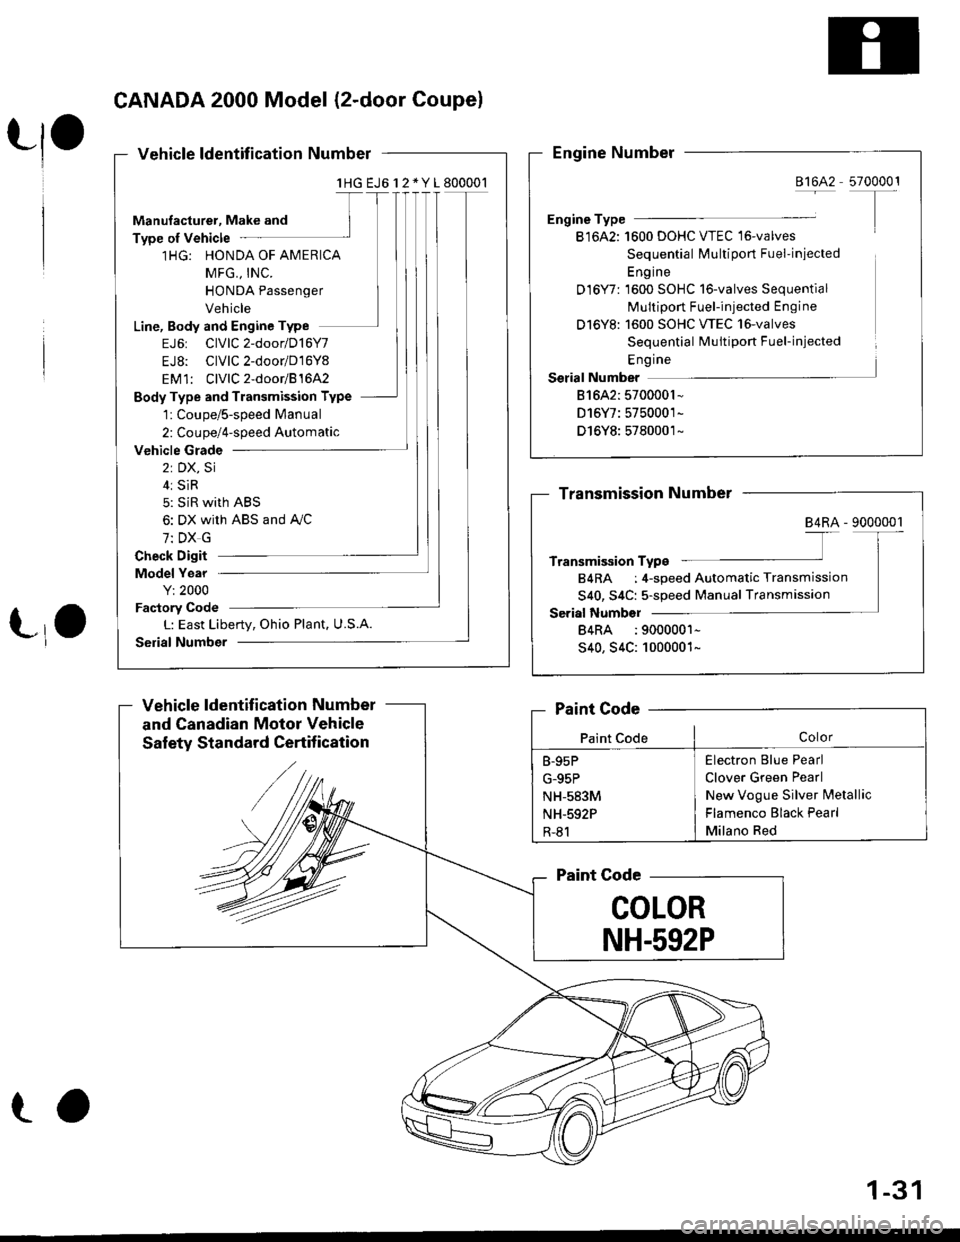 HONDA CIVIC 2000 6.G Owners Manual CANADA 2000 Model (2-door Coupel
Vehicle ldentification Number
lHG EJ6l 2 * Y 1800001
Manufacturer, Make and
Type of Vehicle
1HG: HONDA OF AMERICA
MFG,, INC.
HONDA Passenger
Vehicle
Line, Body and En